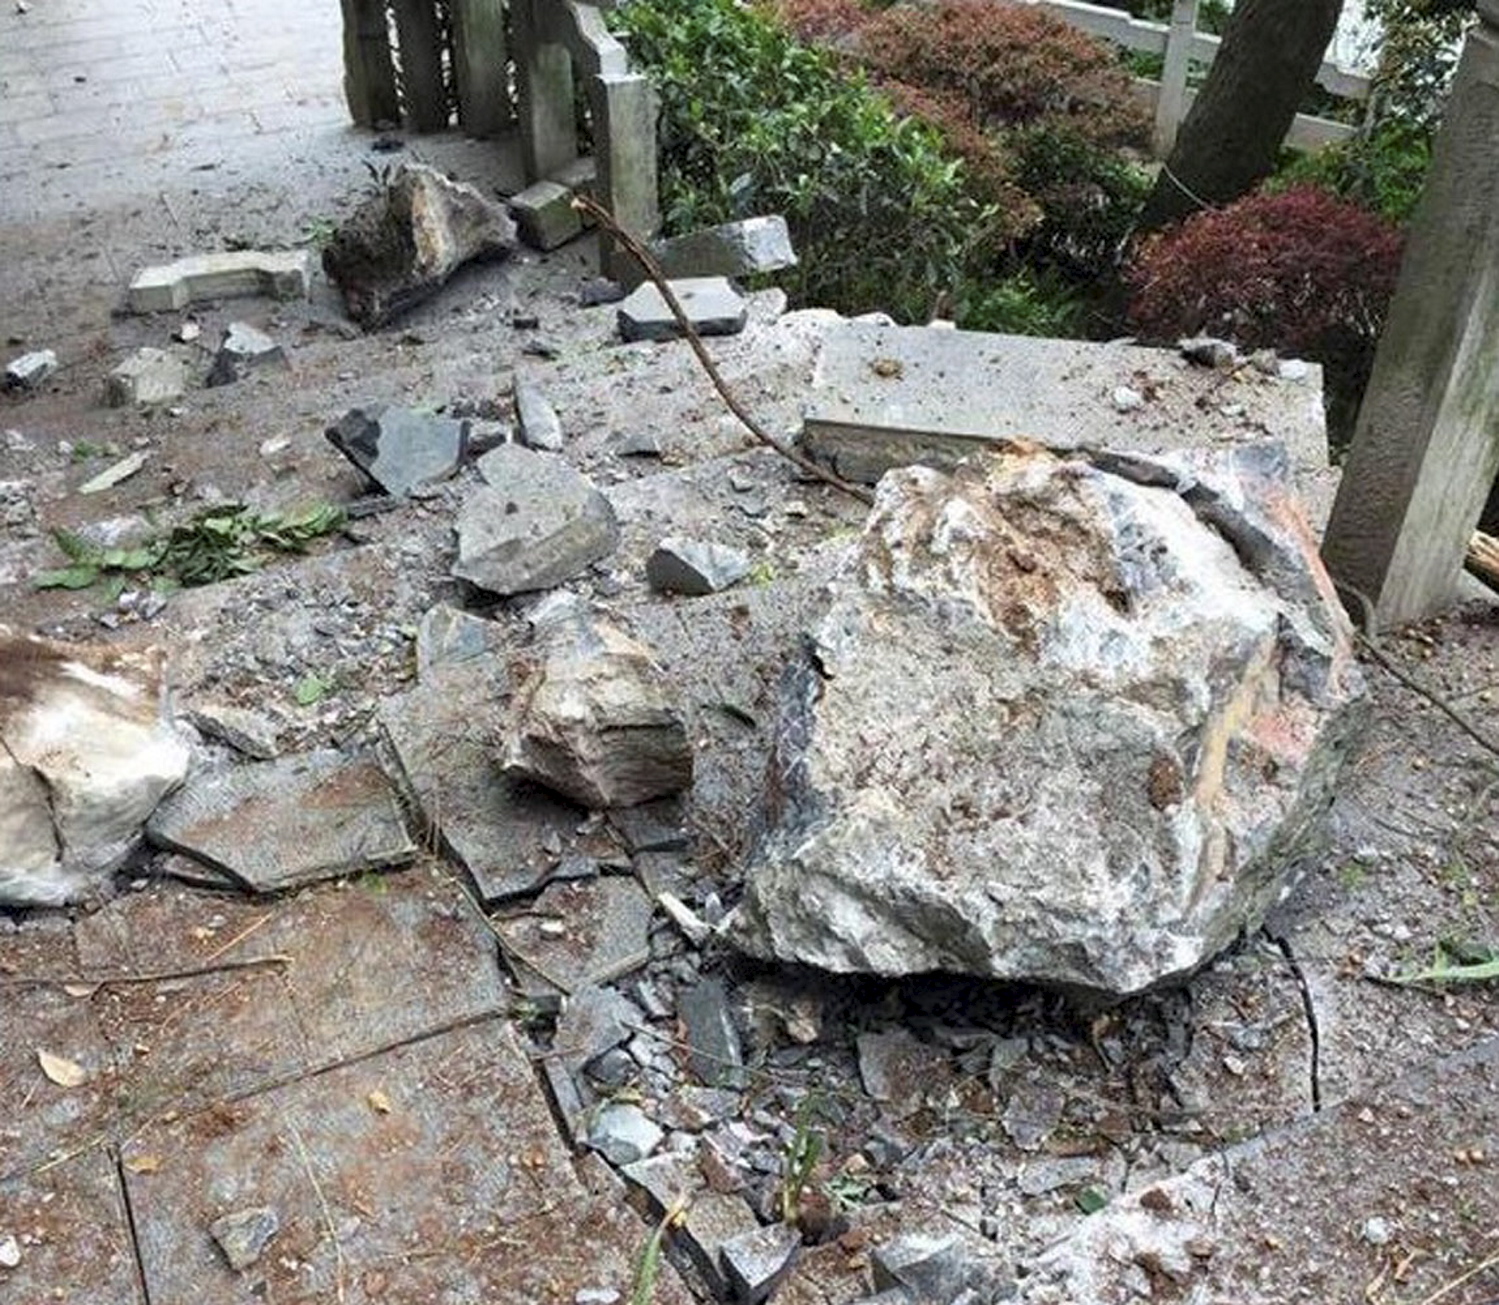 Seven tourists killed in rockfall at China beauty spot